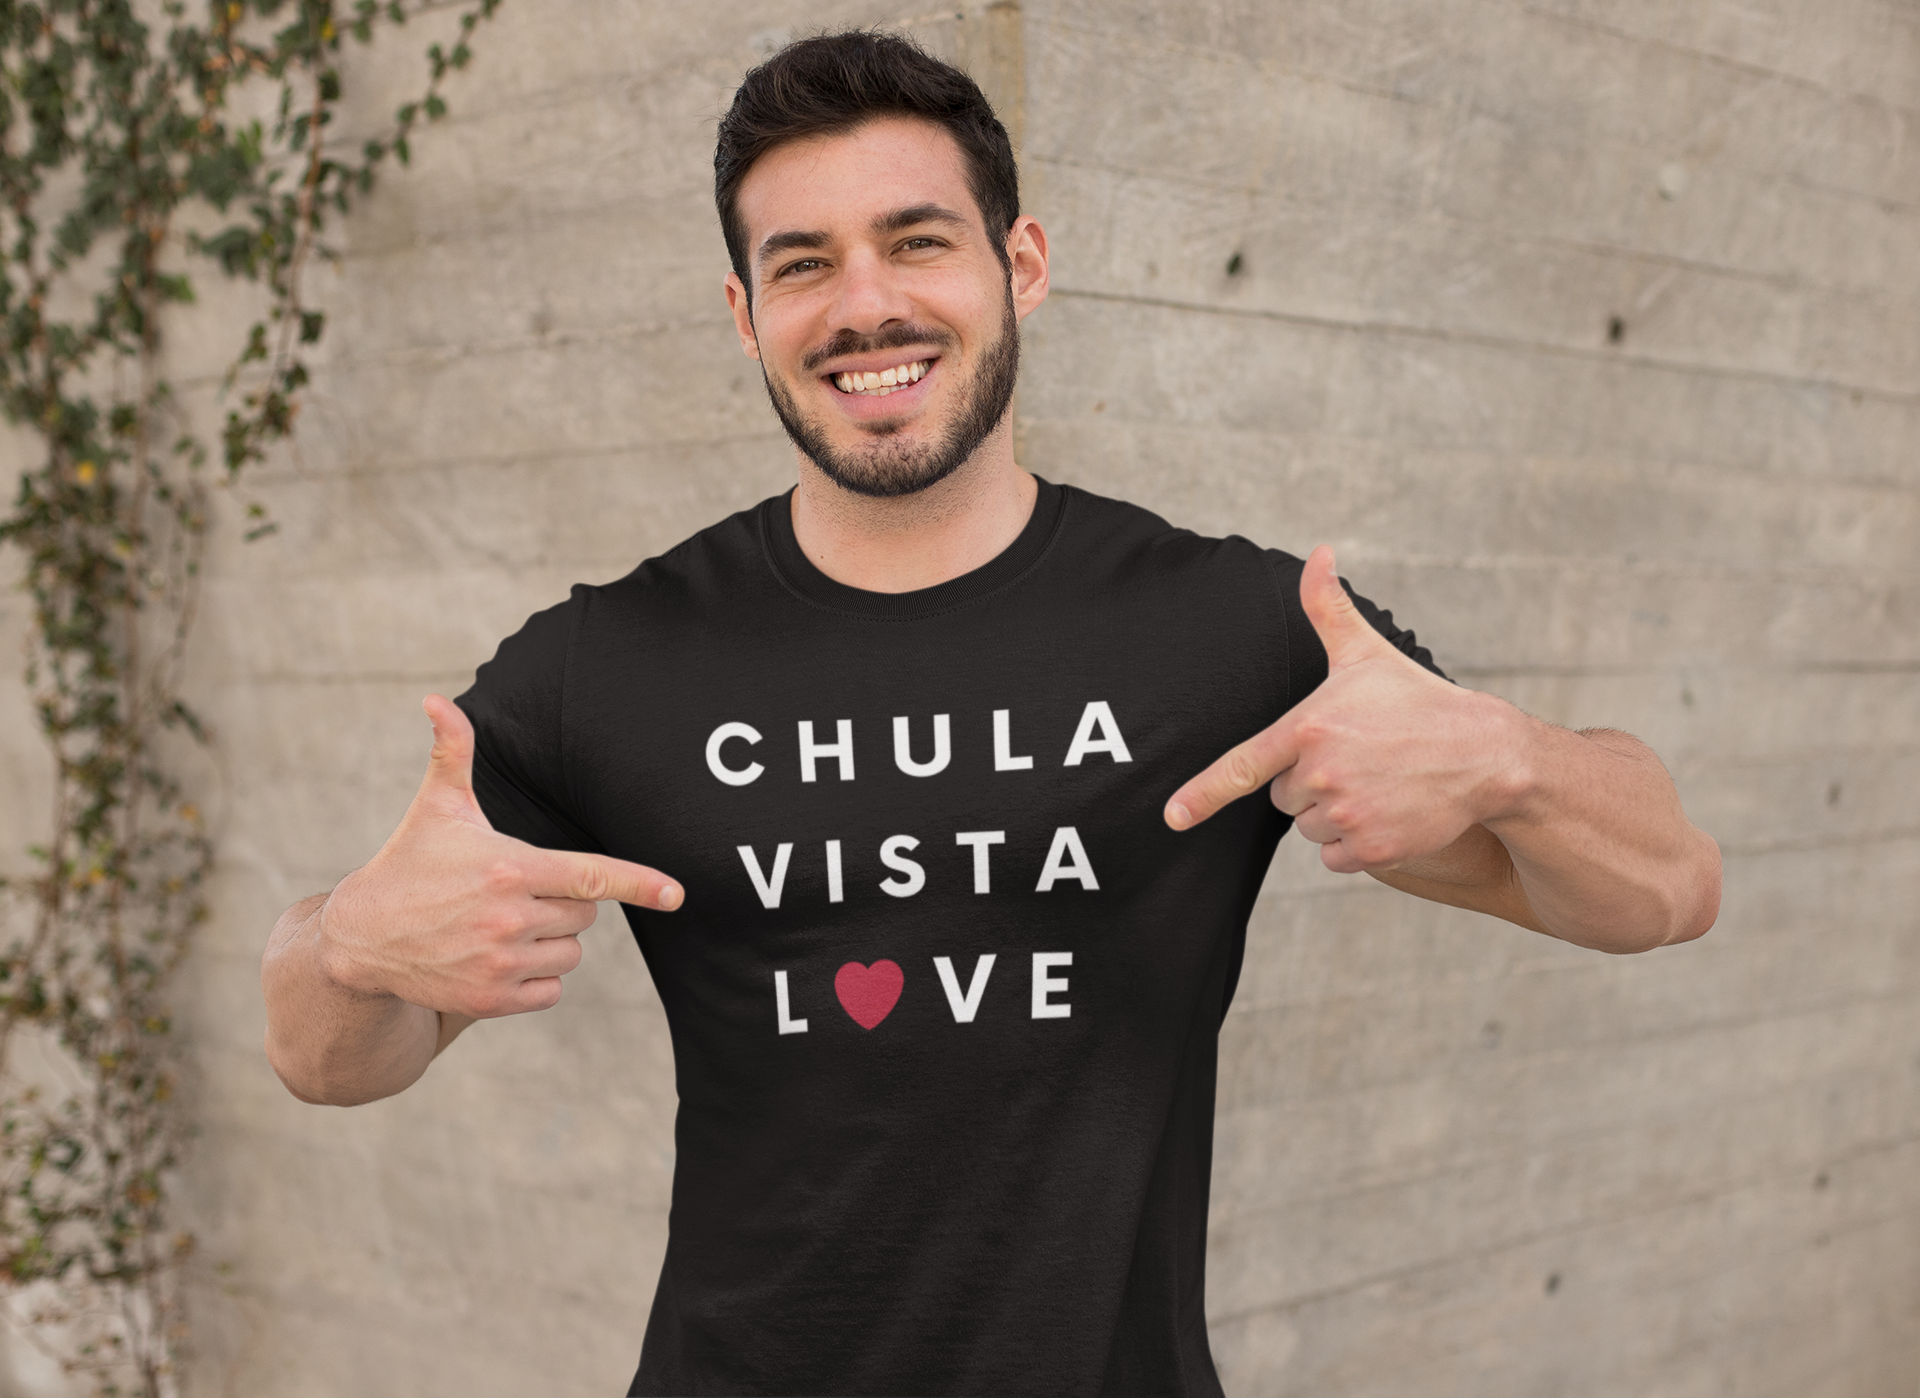 Happy Hispanic man standing in front of brick wall pointing at his Chula Vista t-shirt.